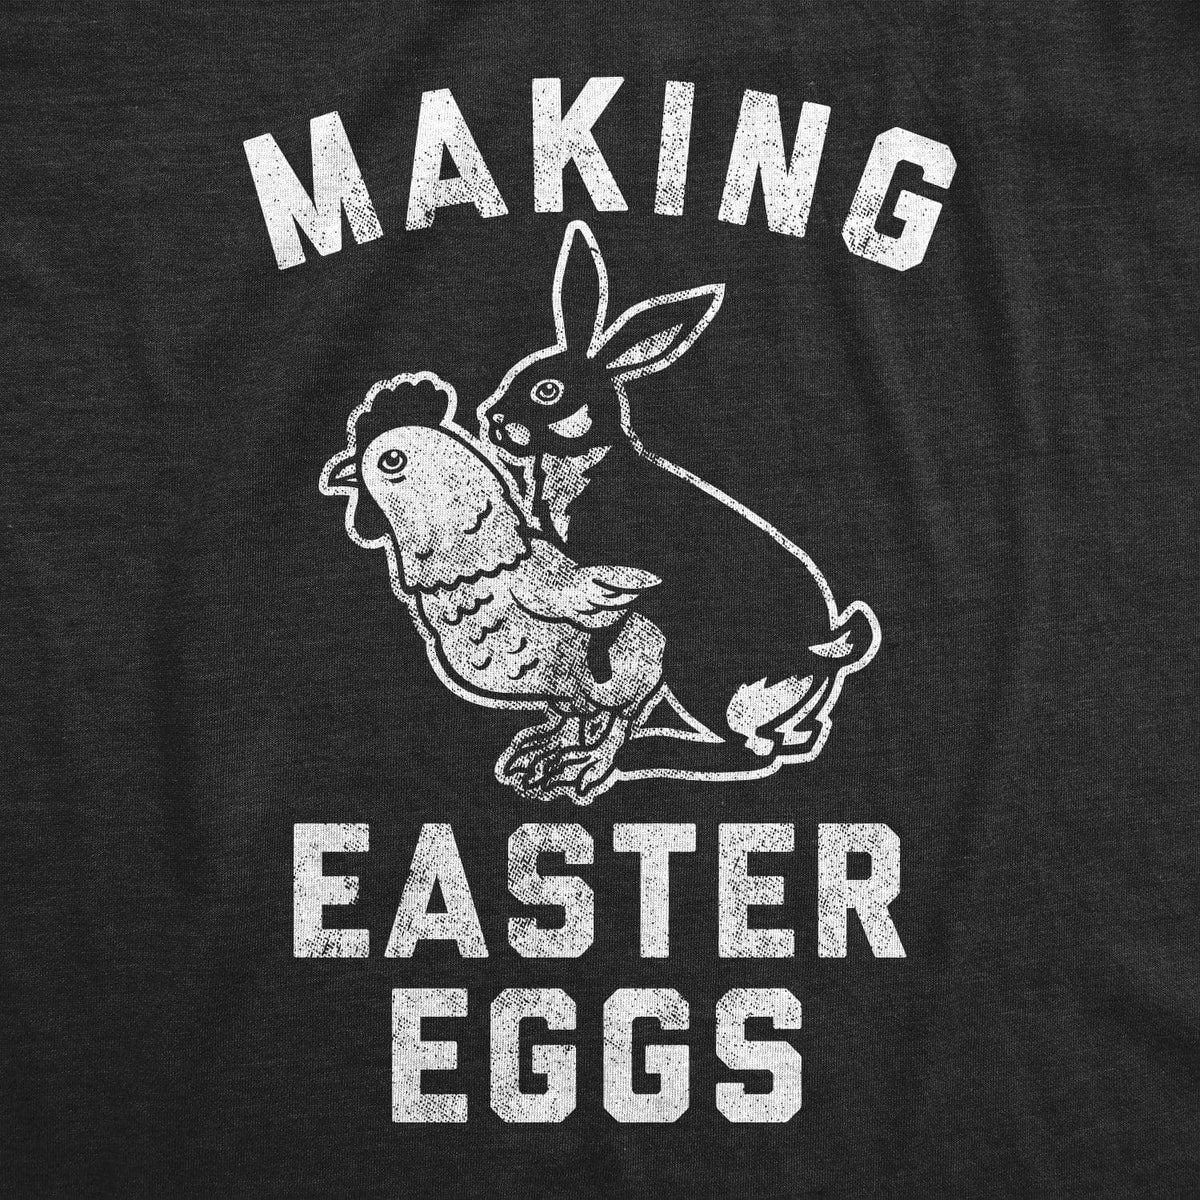 Making Easter Eggs Men&#39;s Tshirt  -  Crazy Dog T-Shirts